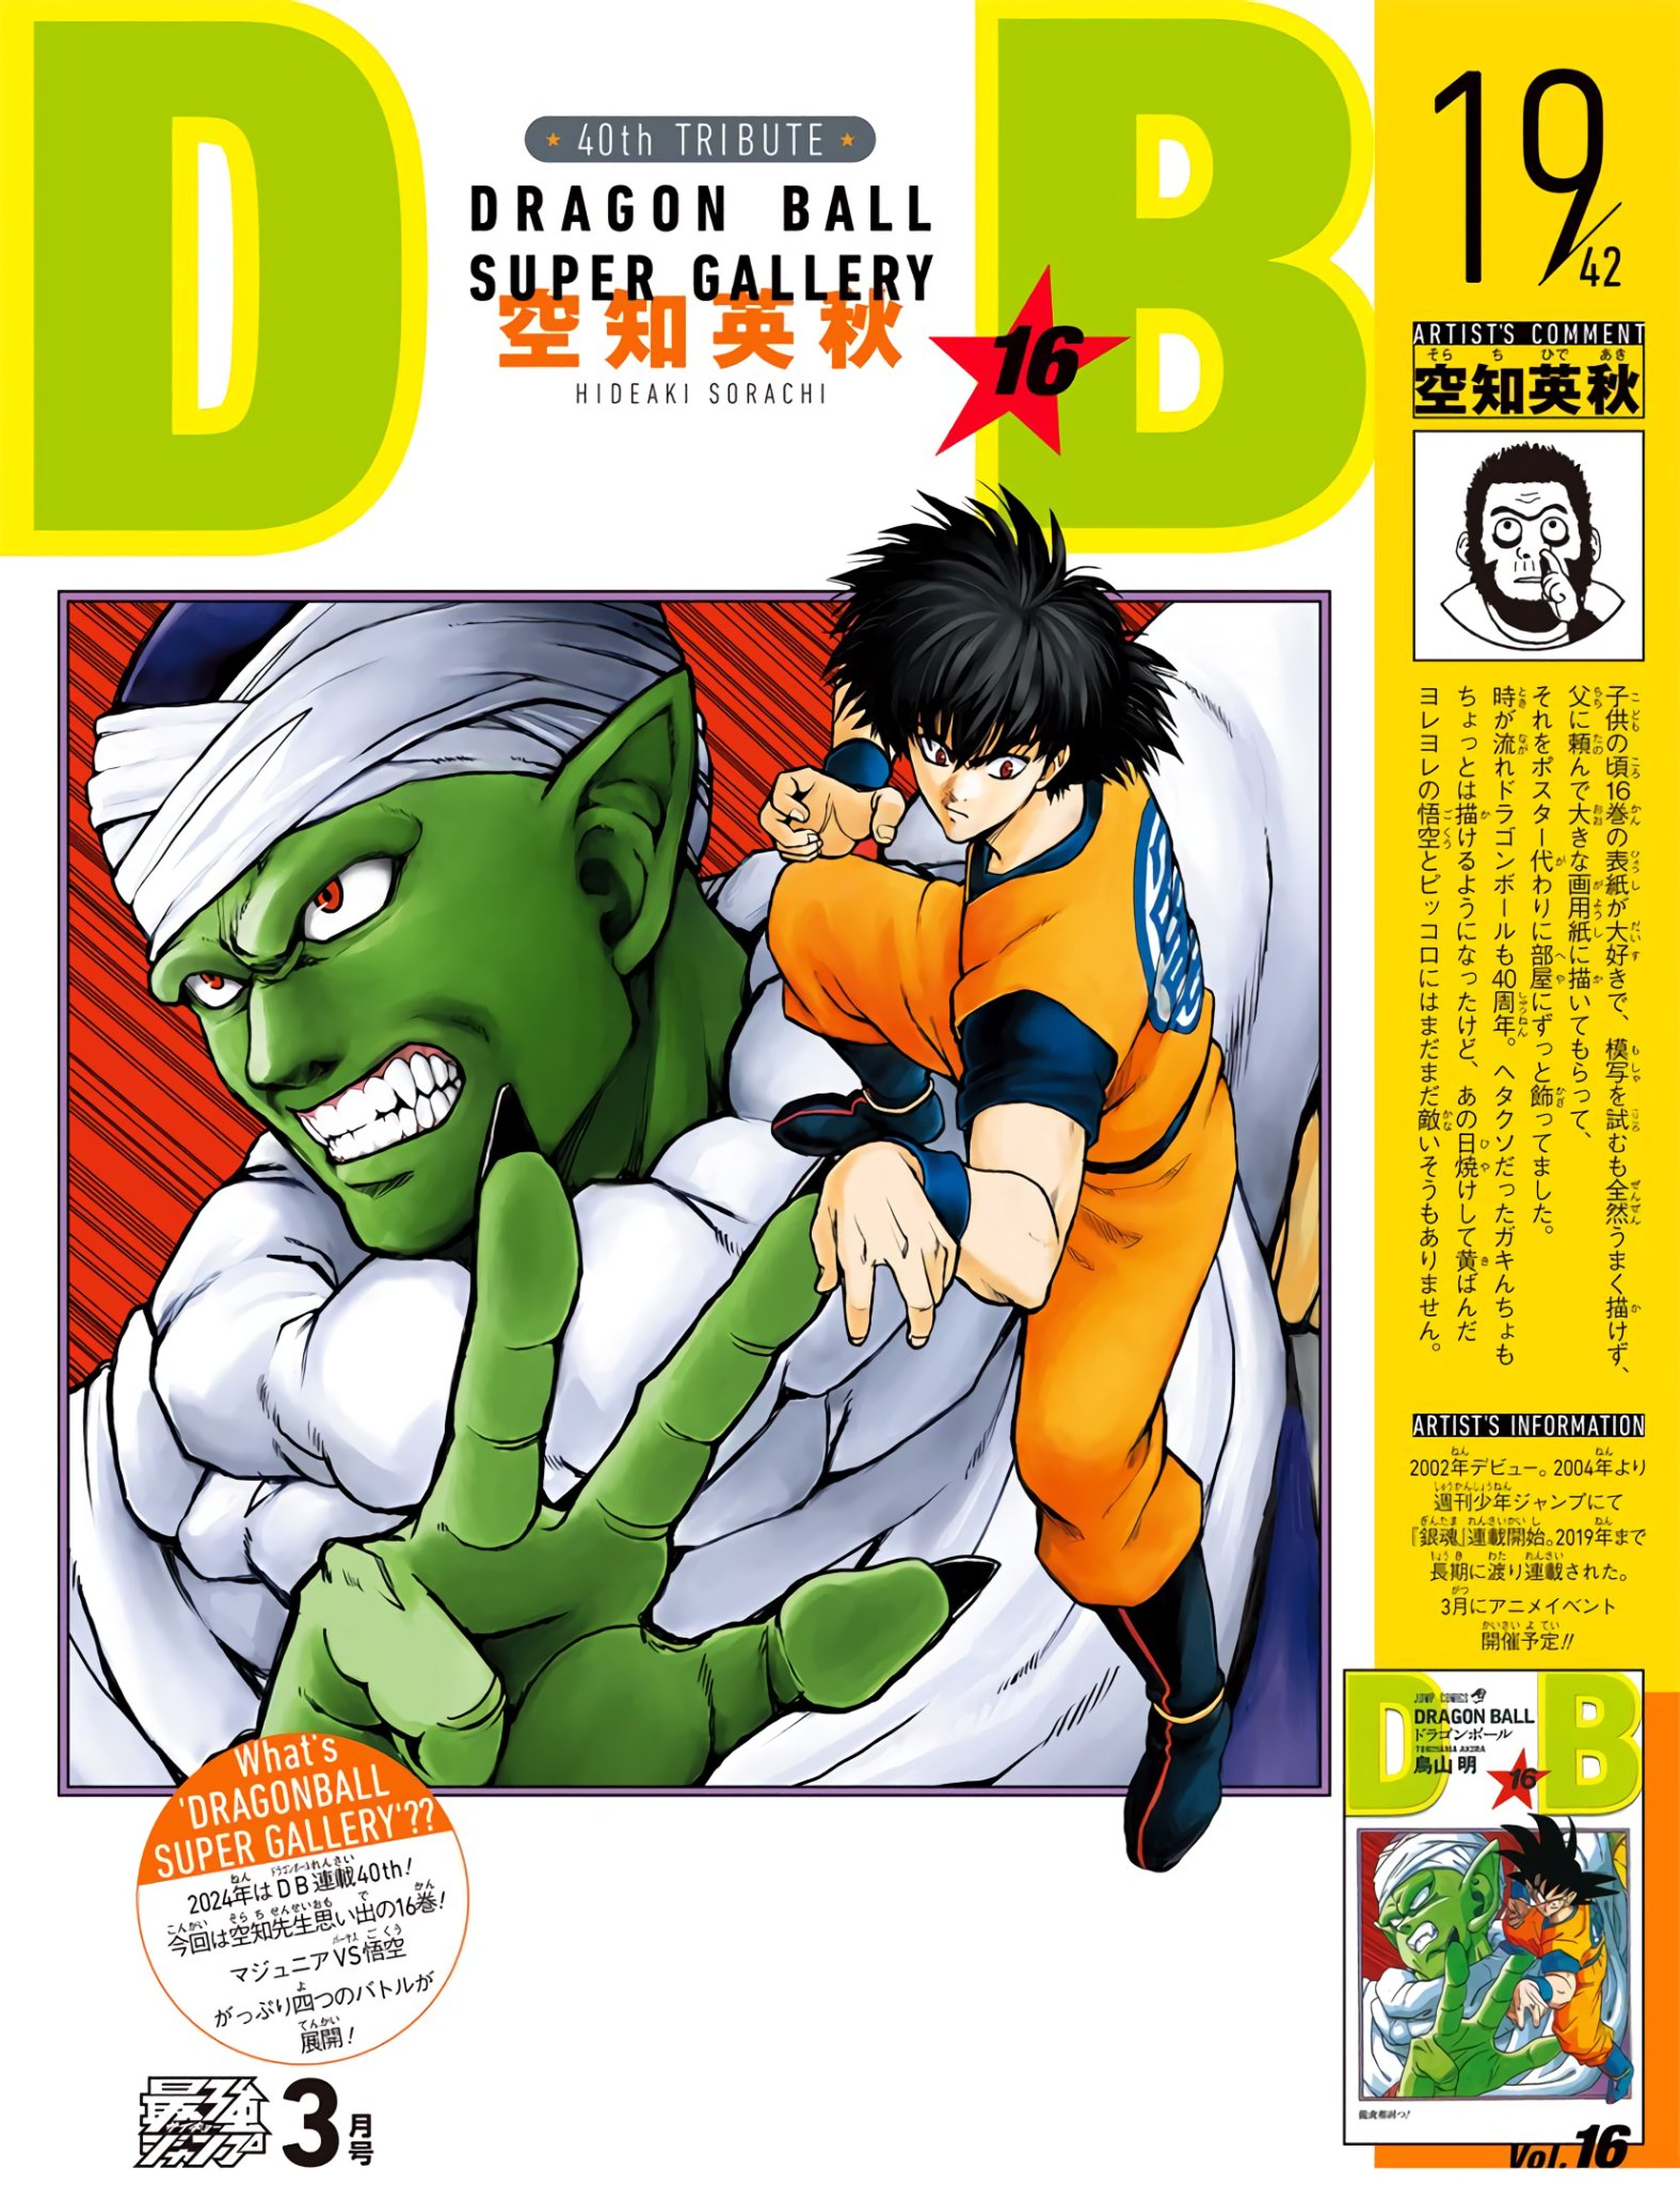 Dragon Ball - Hideaki Sorachi, autor de Gintama, recrea una de las portadas originales de la serie manga de Akira Toriyama